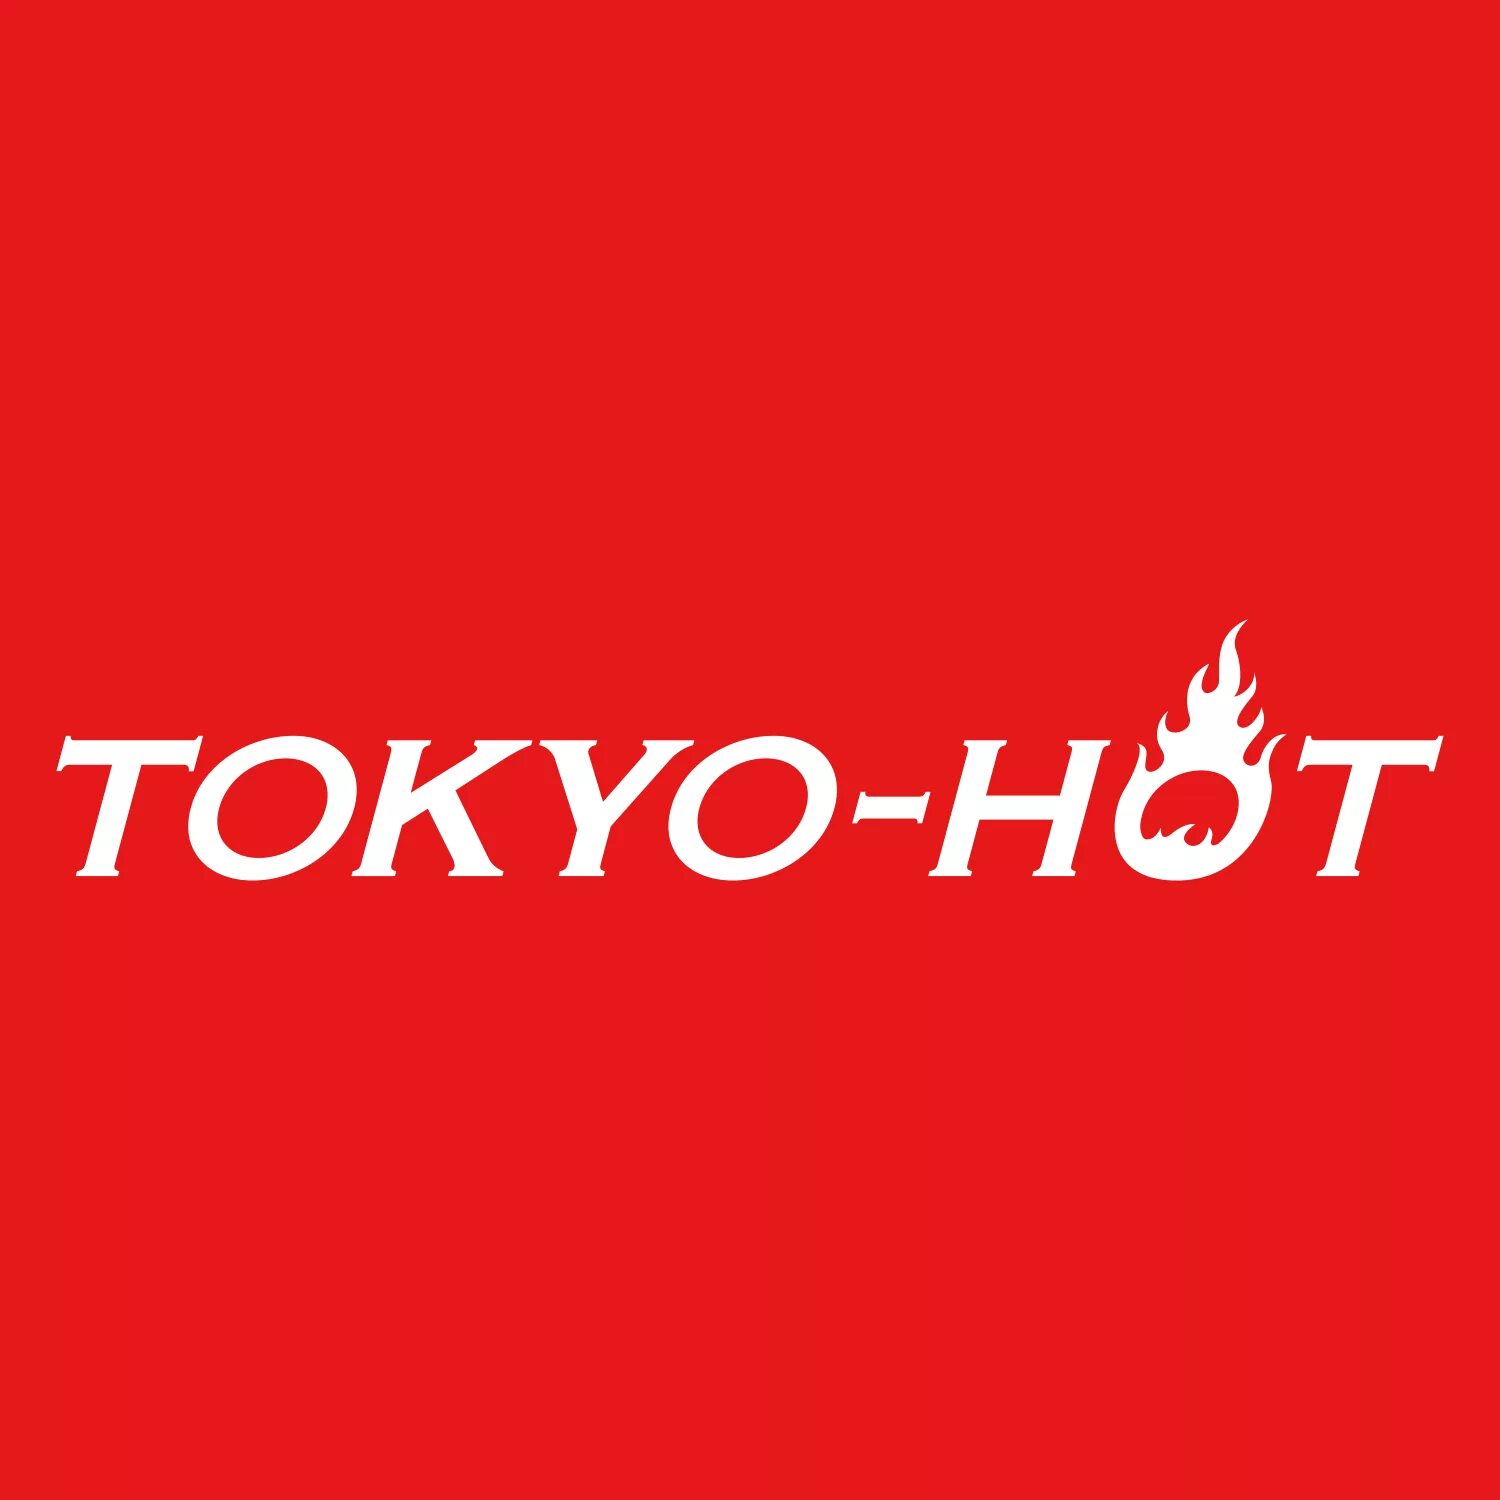 Tokyo motion